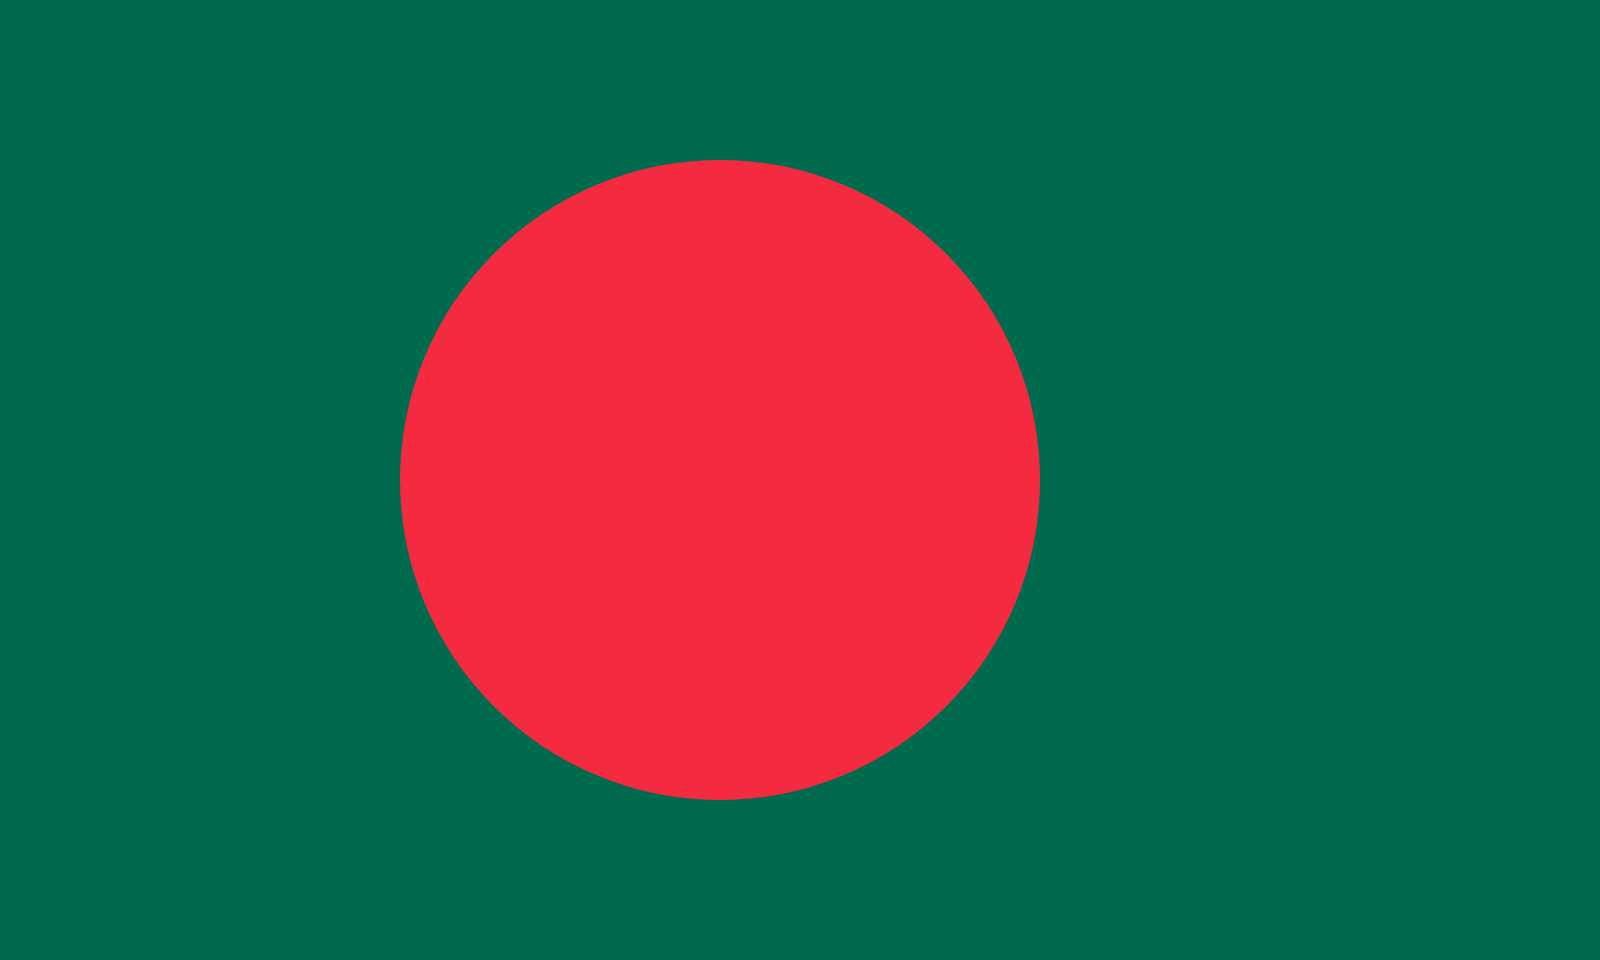 Bangladesh - Powered by Eduhyme.com